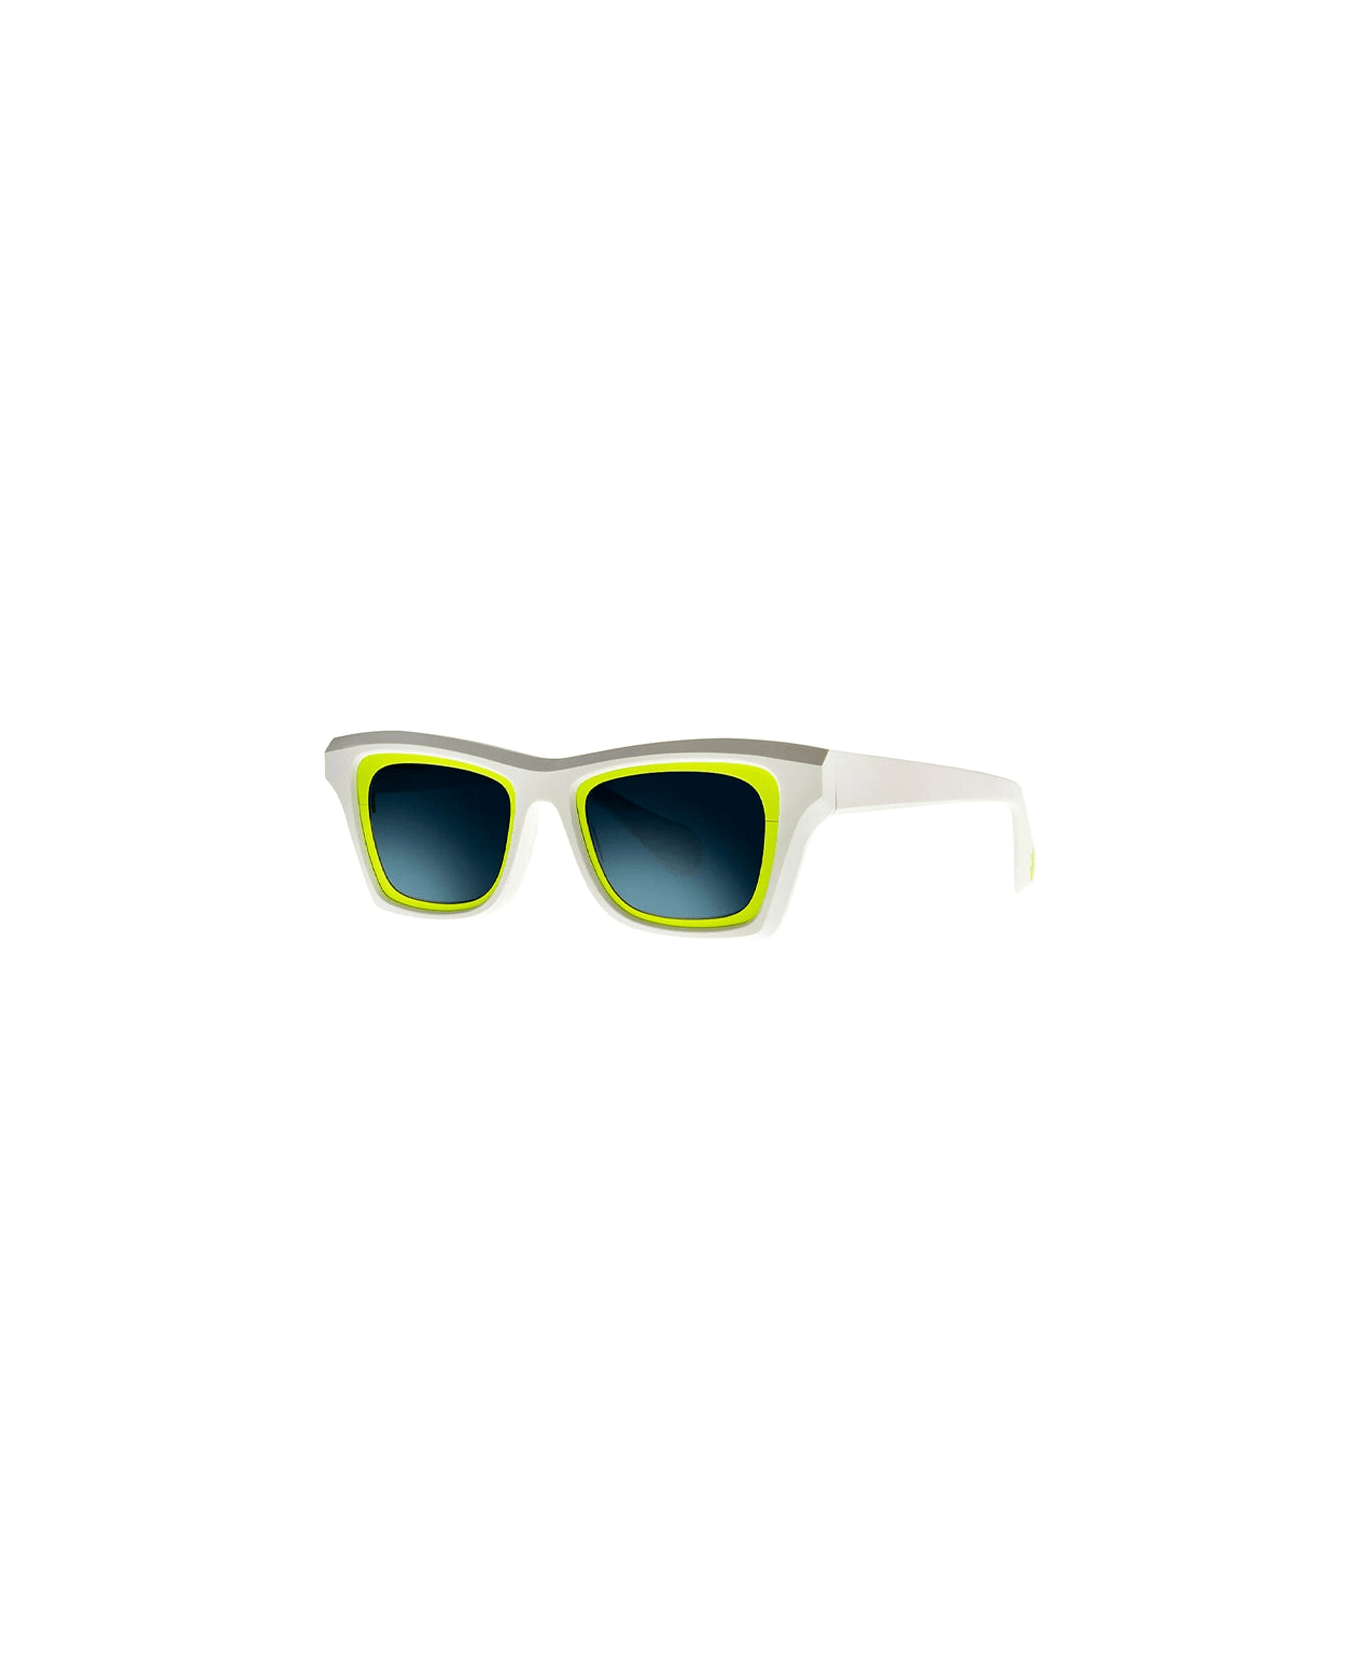 Theo Eyewear Mille+95 - 013 Sunglasses - white/fluo yellow